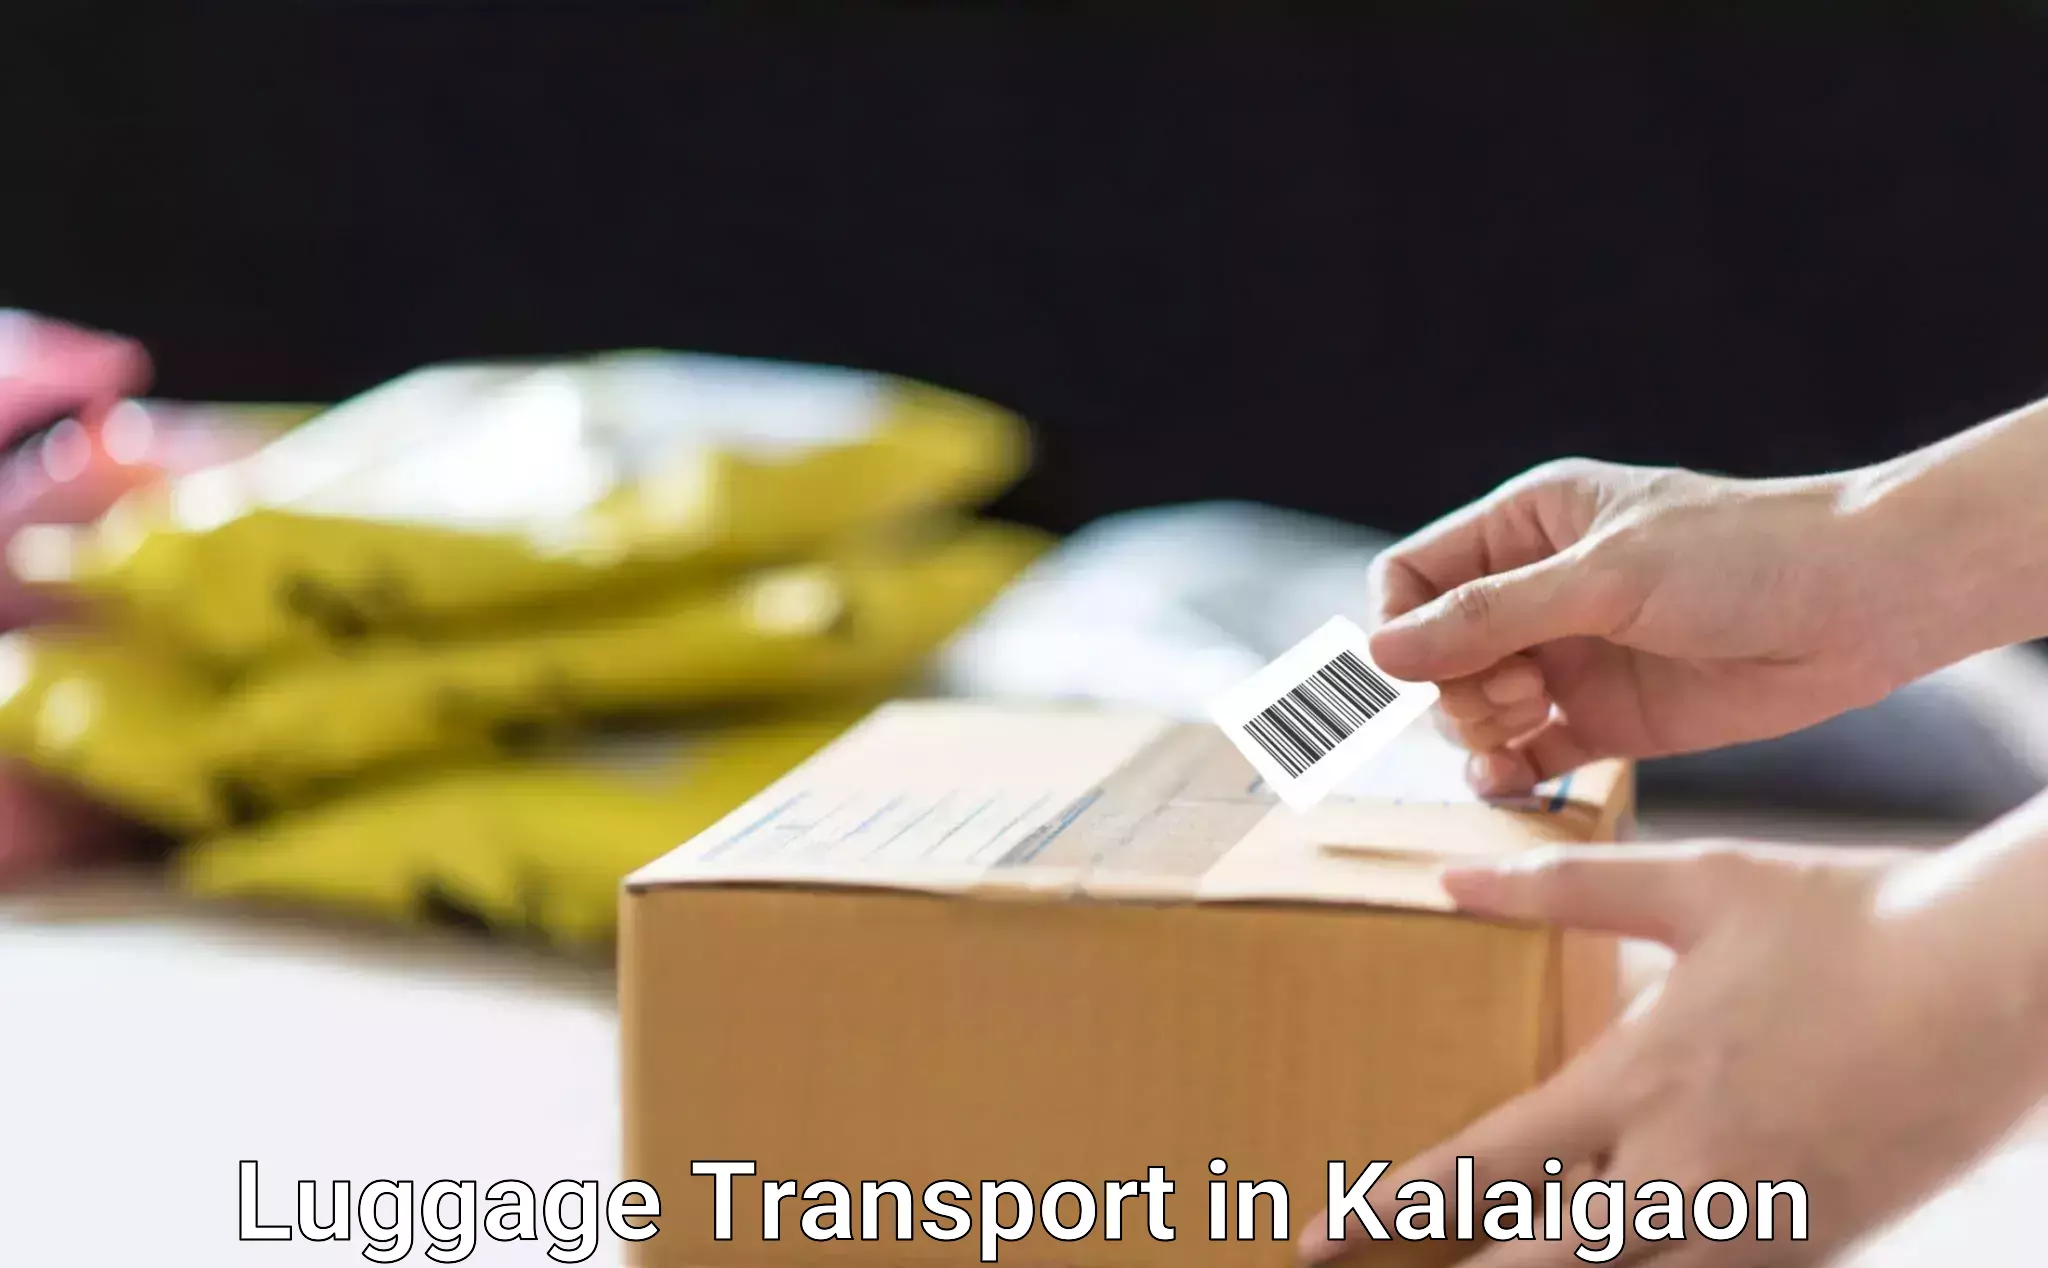 Heavy luggage shipping in Kalaigaon